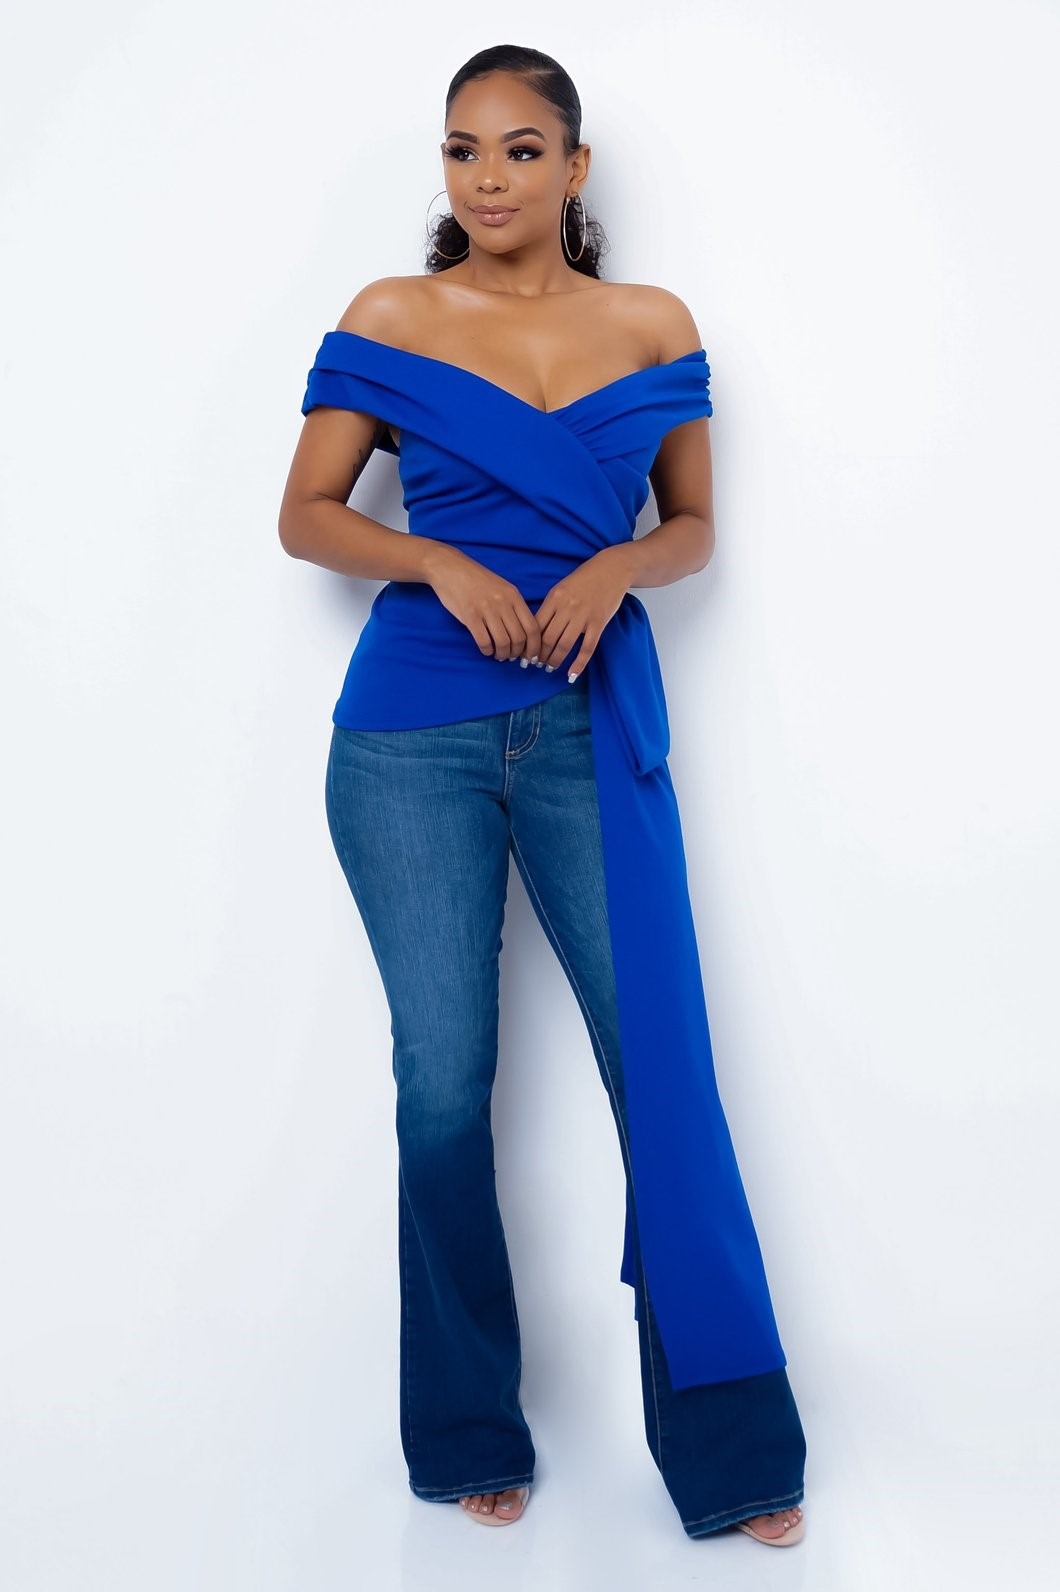 Off Shoulder Side Sash Royal Blue Top Critique' Boutique - Online Clothing, Women's Clothing